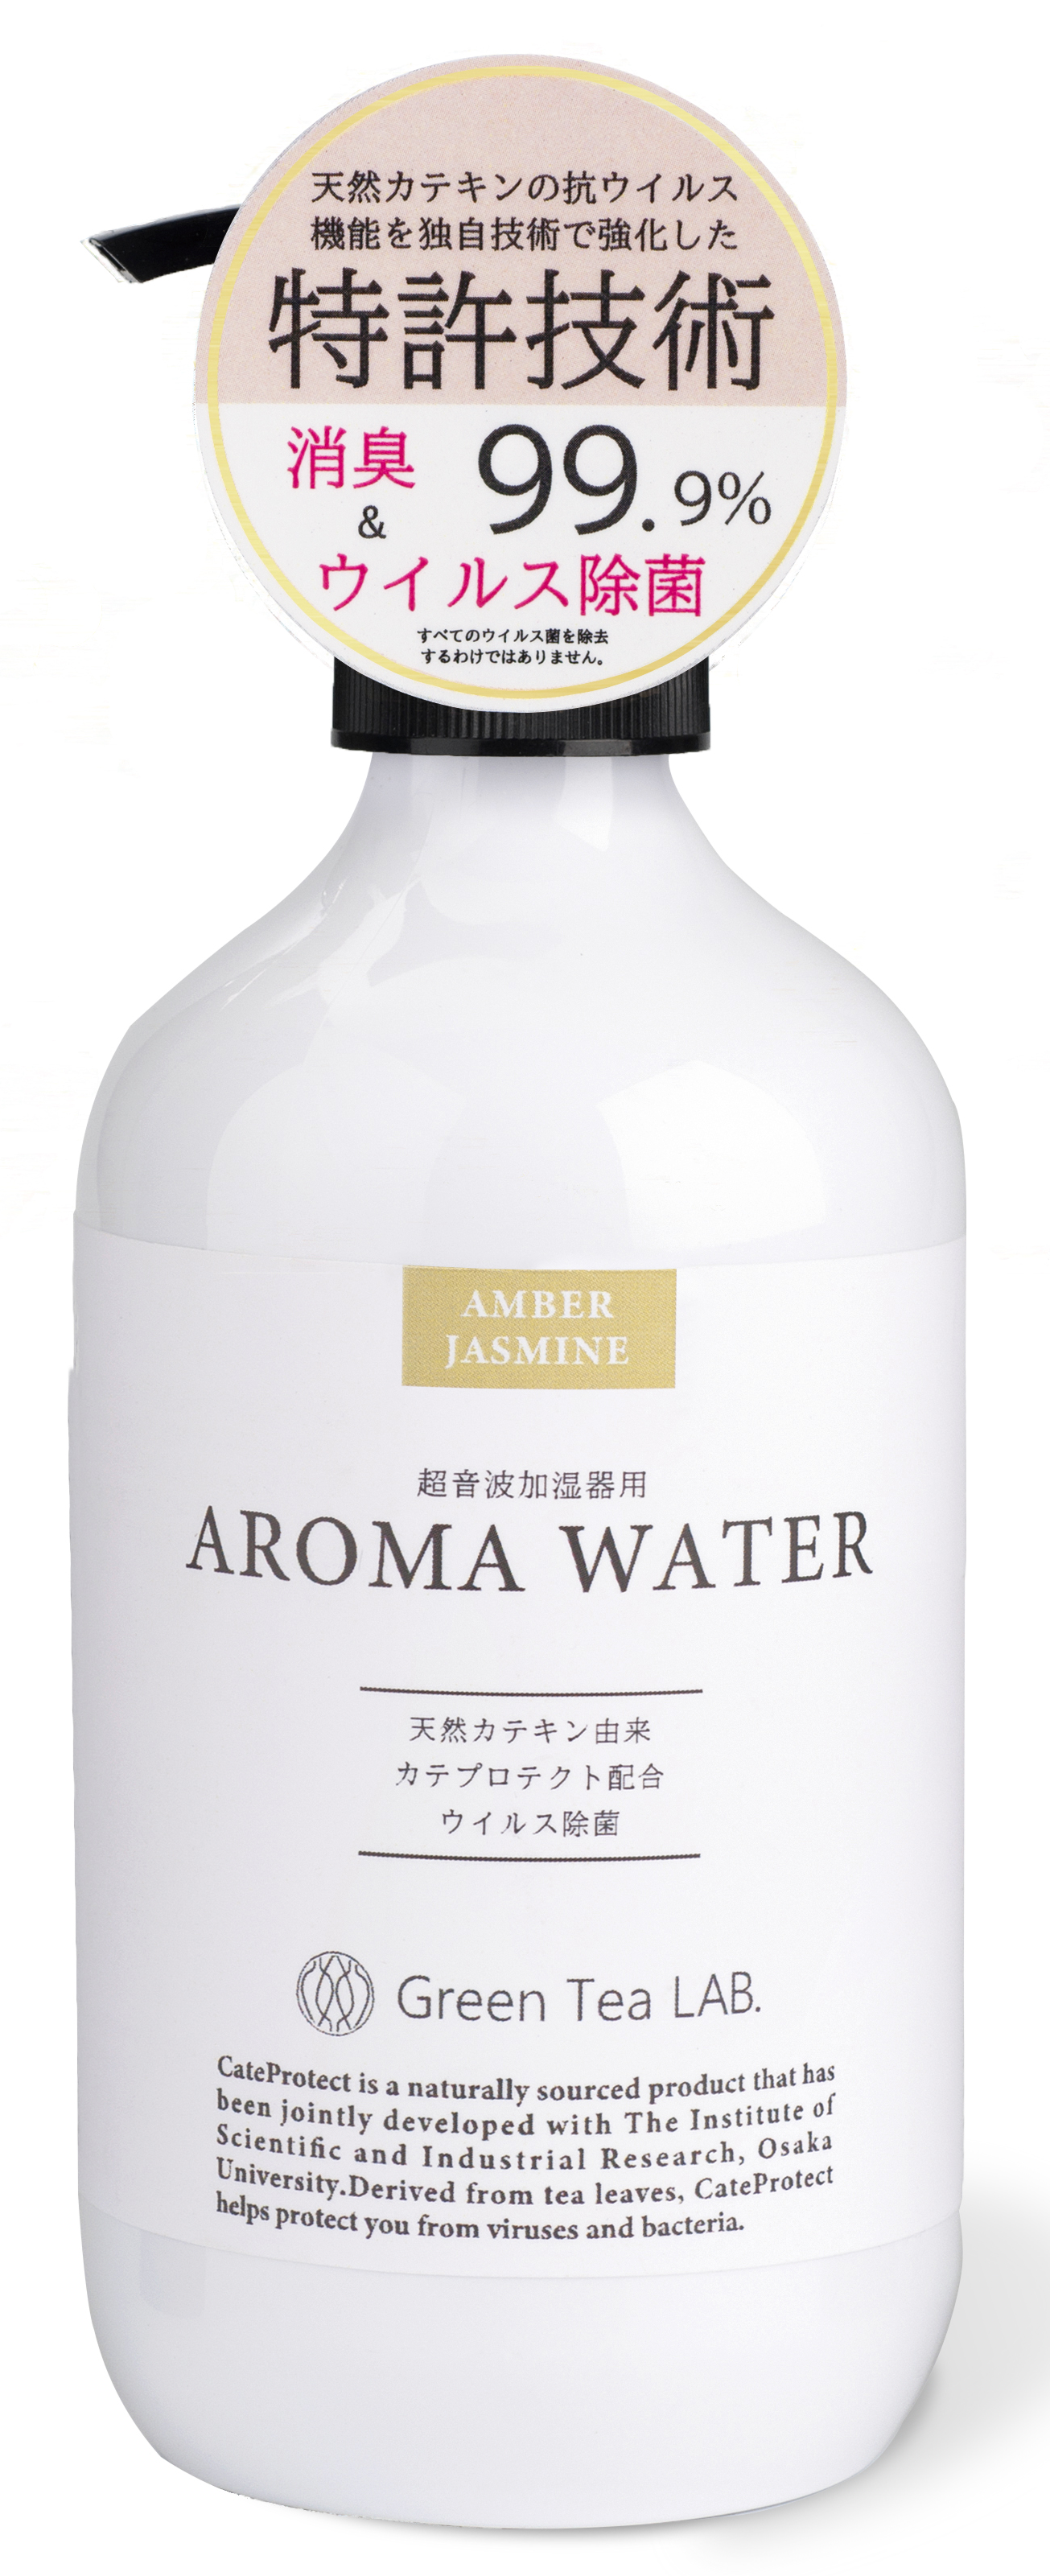 Green Tea LAB | AROMA WATER | Antibacterial/Antiviral aroma water